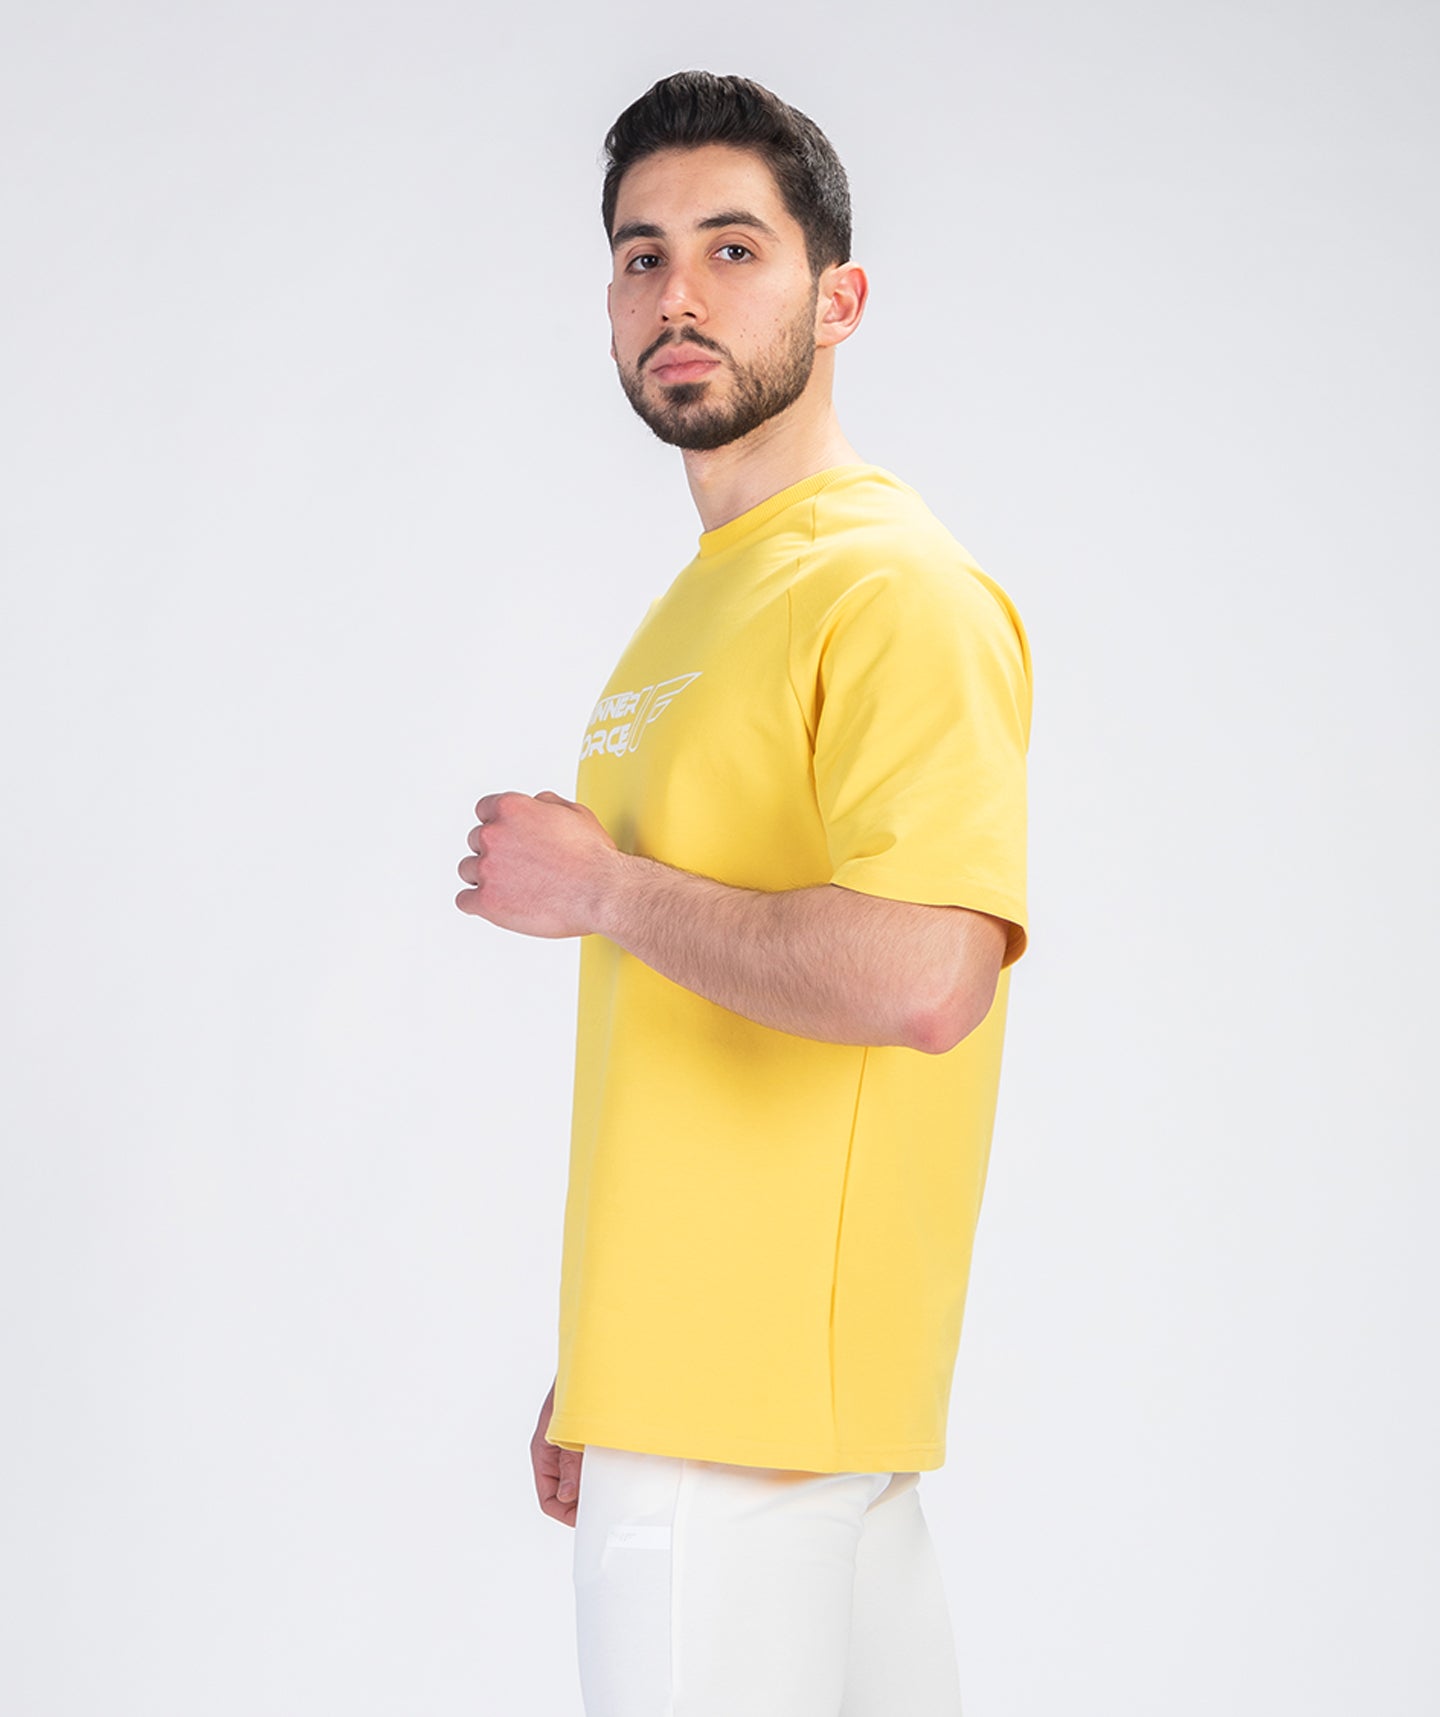 Kg ⚜  
11259-12 ⚜  
B6 ⚜  
PANTONE: Yellow ⚜  
rib 1x2 20/1 soft 40D two, 95 % cotton and 5 % elastane, P:Yellow